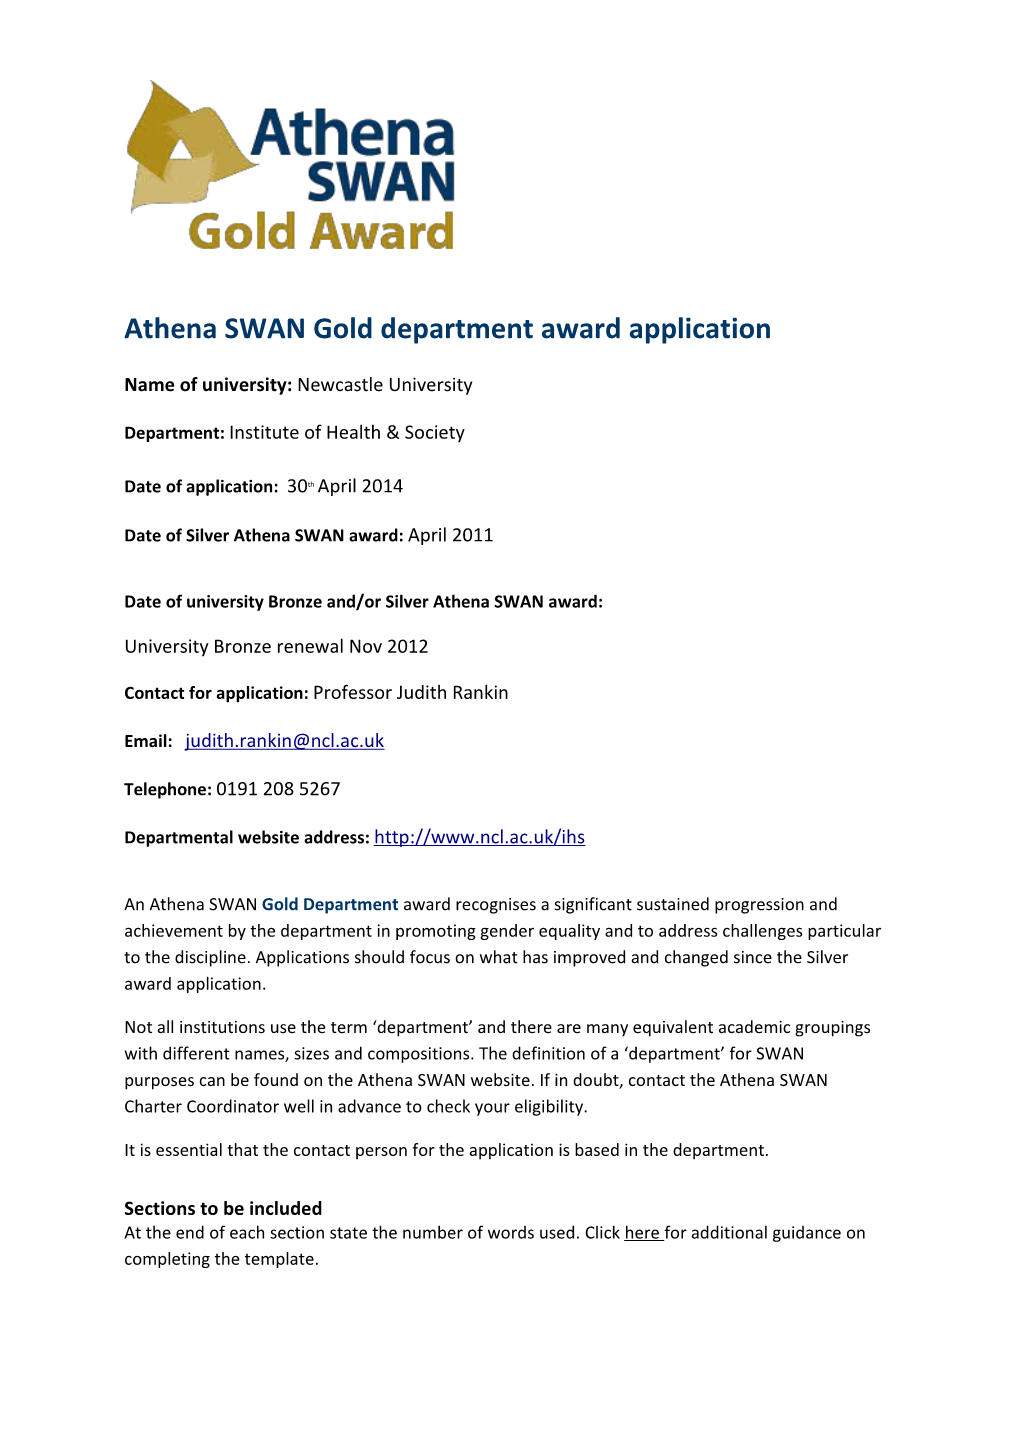 Athena SWAN Gold Department Award Application